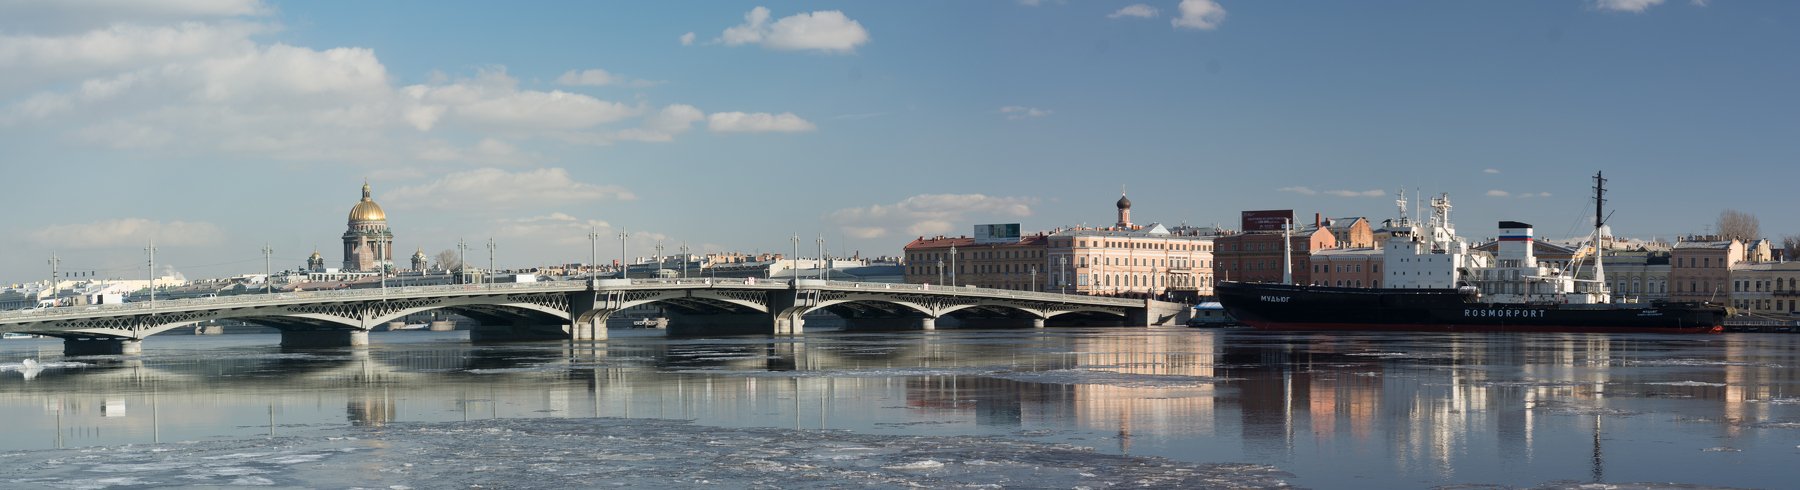 Санкт-Петербург весна нева ледокол мост отражения, Цукерман Михаил